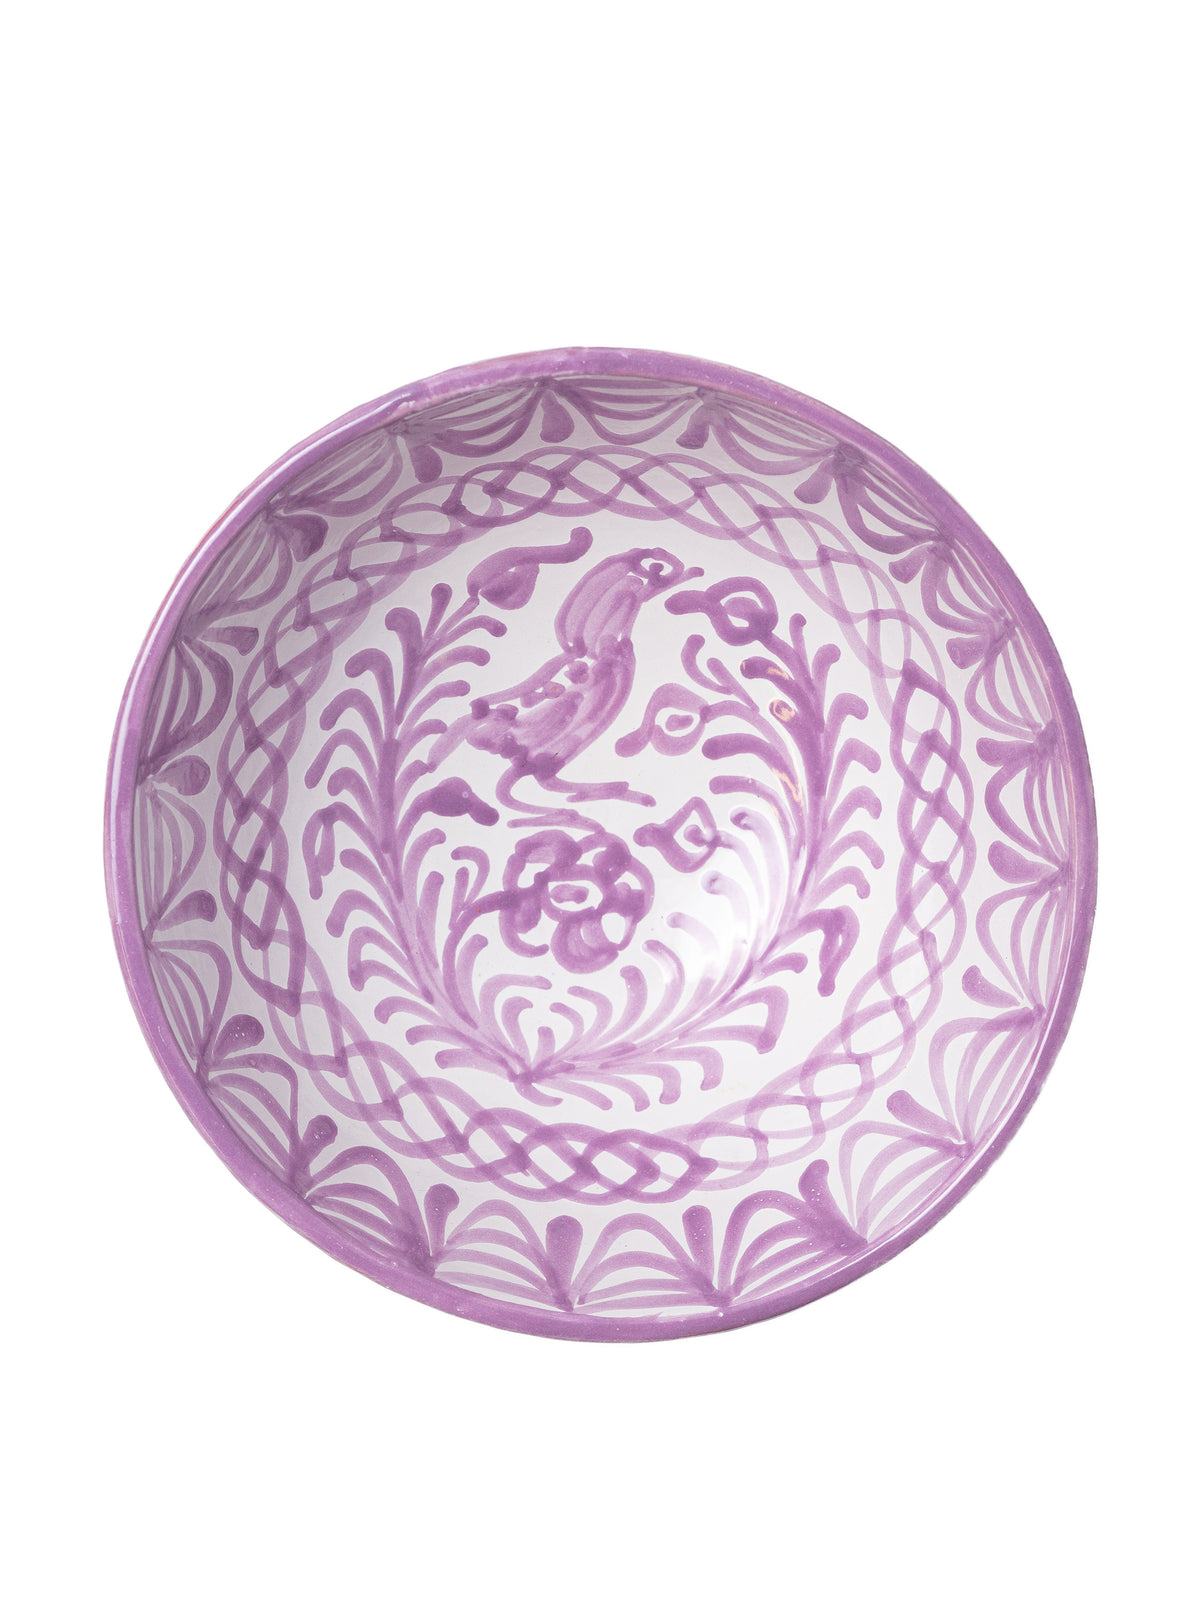 Casa Lila Medium Bowl with Hand-painted Designs